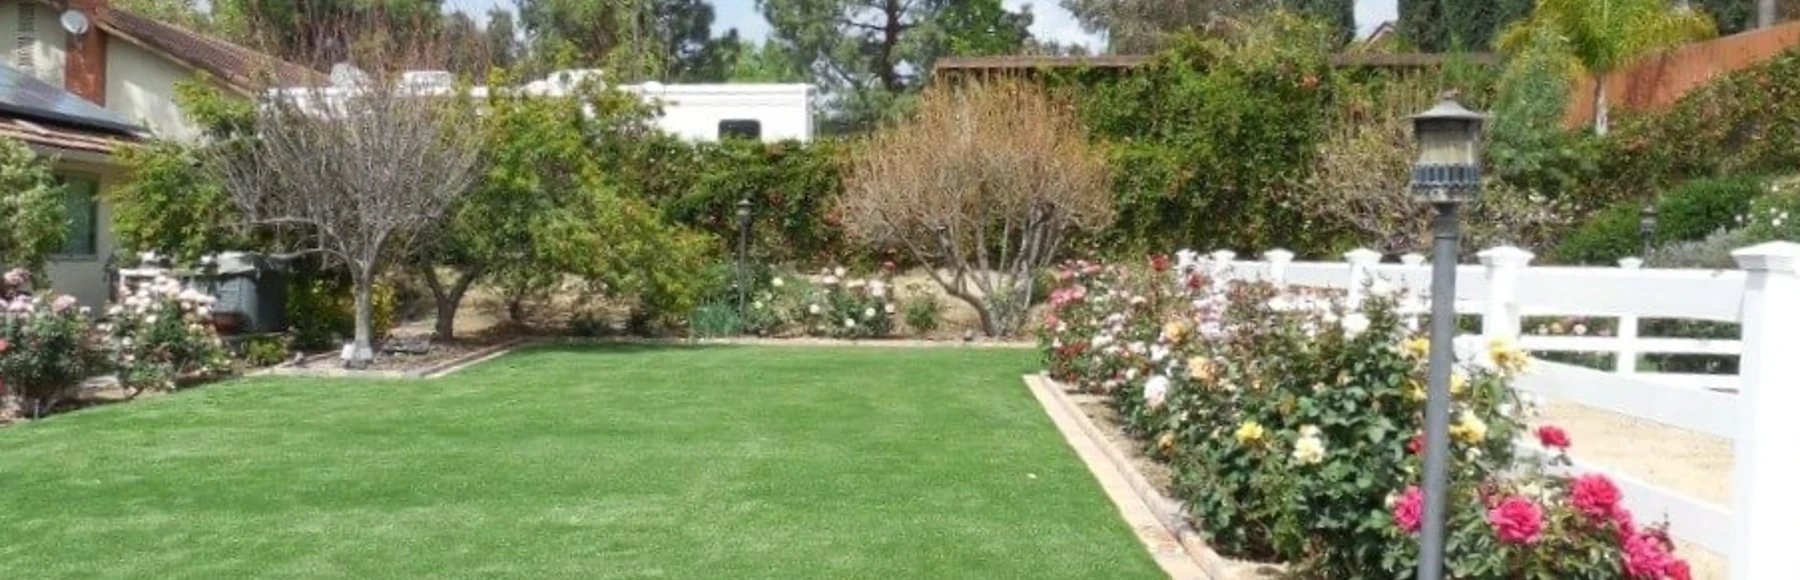 Artificial grass backyard lawn installed in Nevada